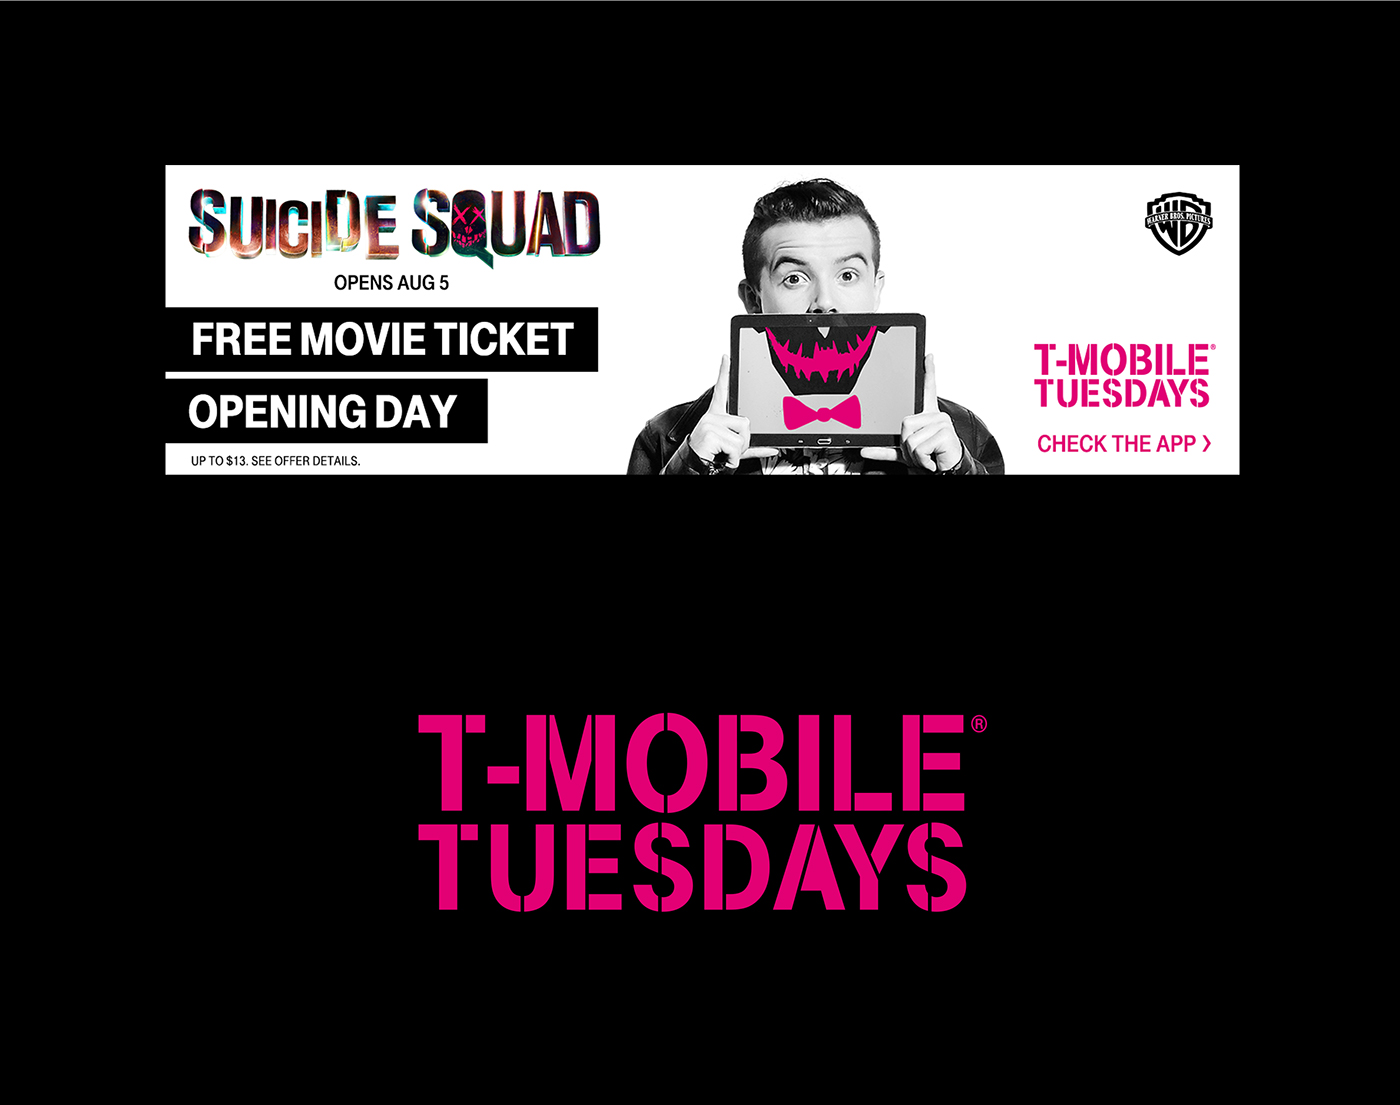 Adobe Portfolio T-Mobile mobile Advertising  Tuesdays Get Thanked